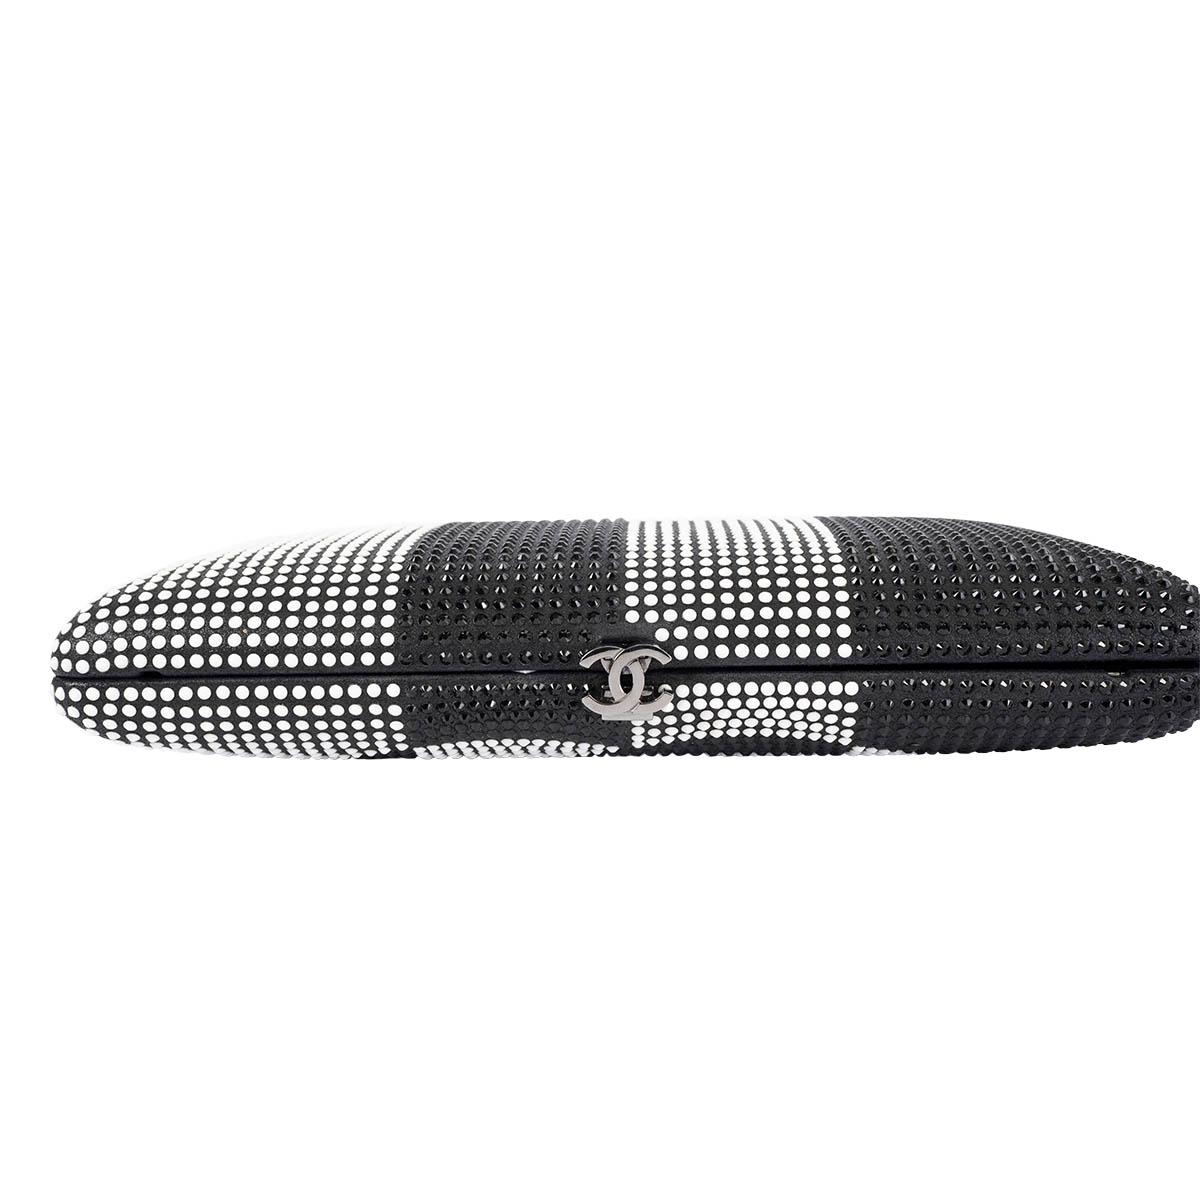 CHANEL black & white 2015 15C DUBAI STRASS CC MINAUDIERE Clutch Bag w Chain For Sale 2